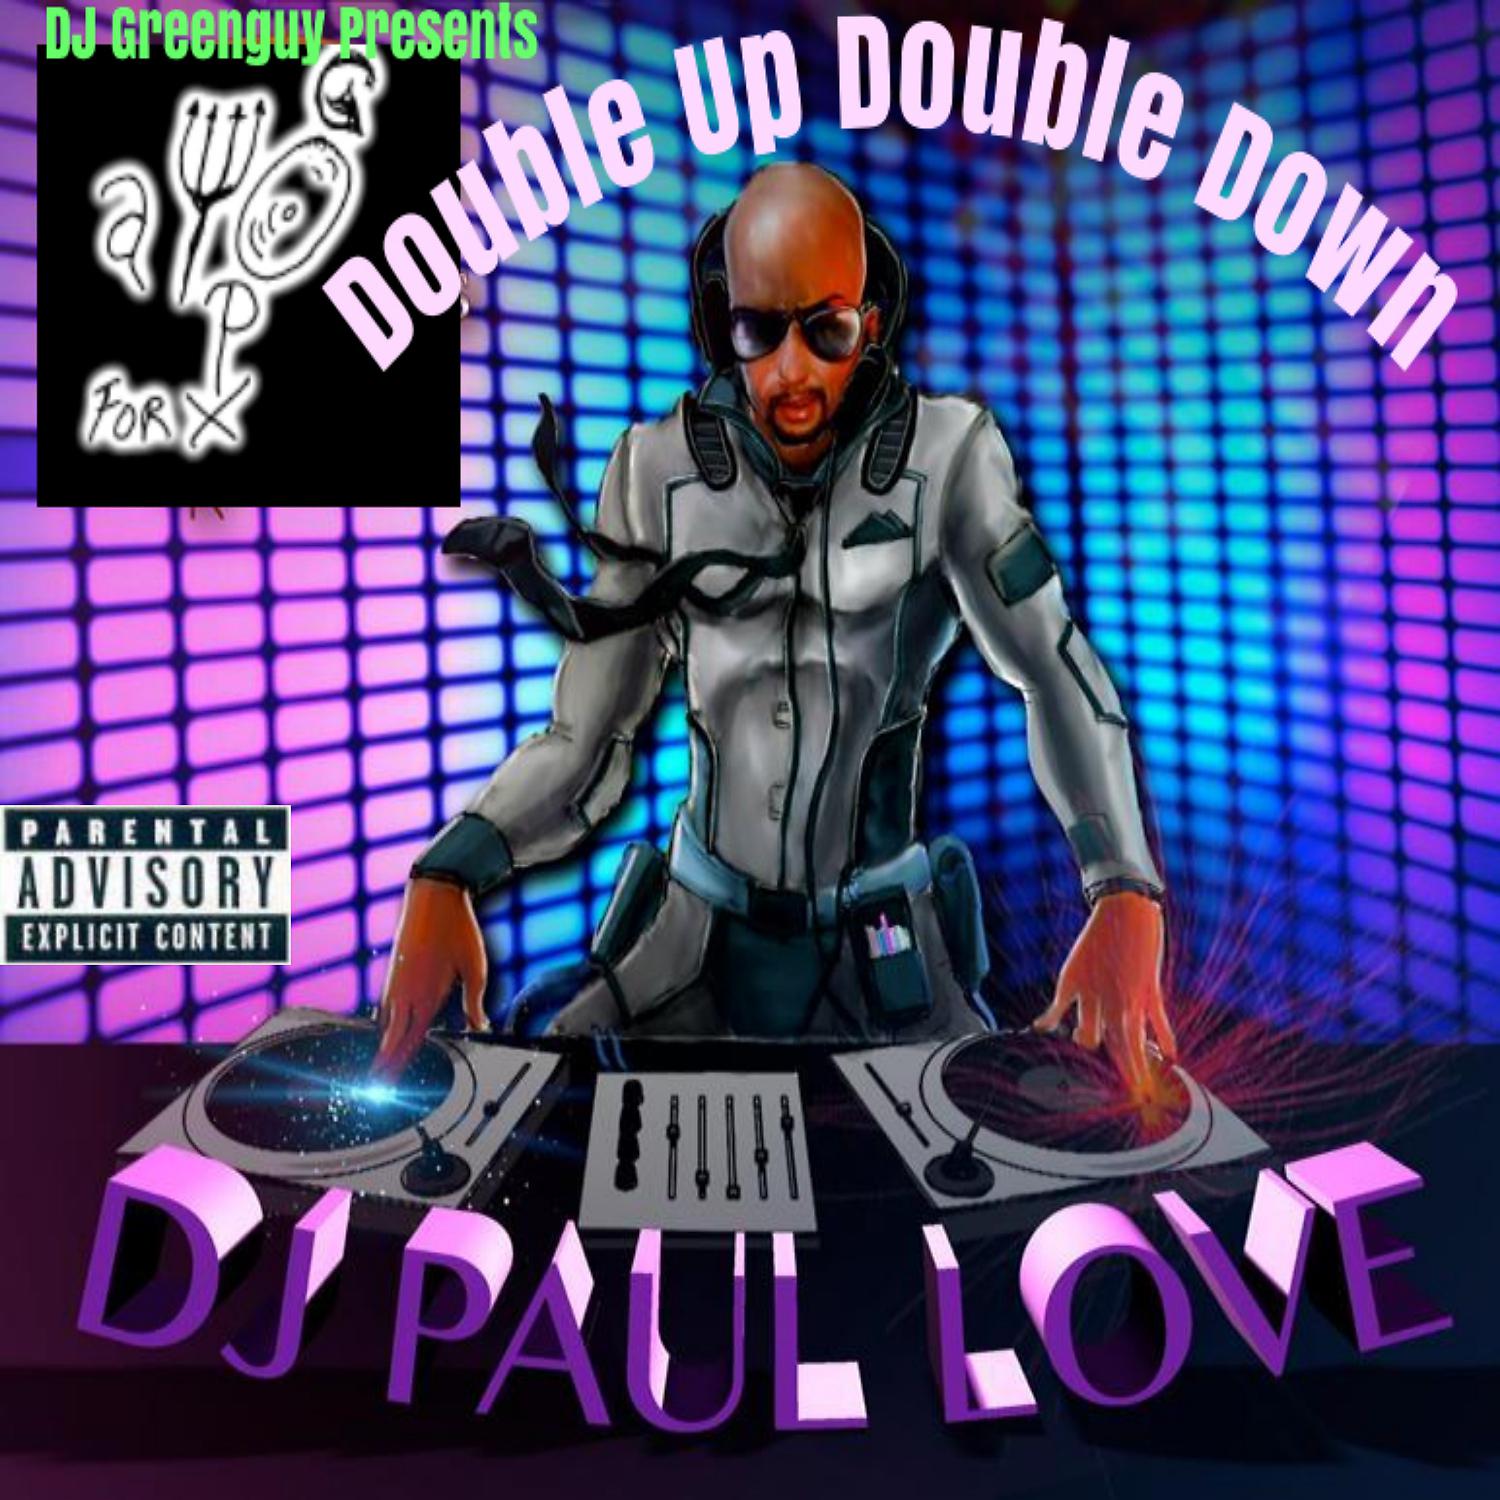 Постер альбома DJ Greenguy Presents Double Up Double Down